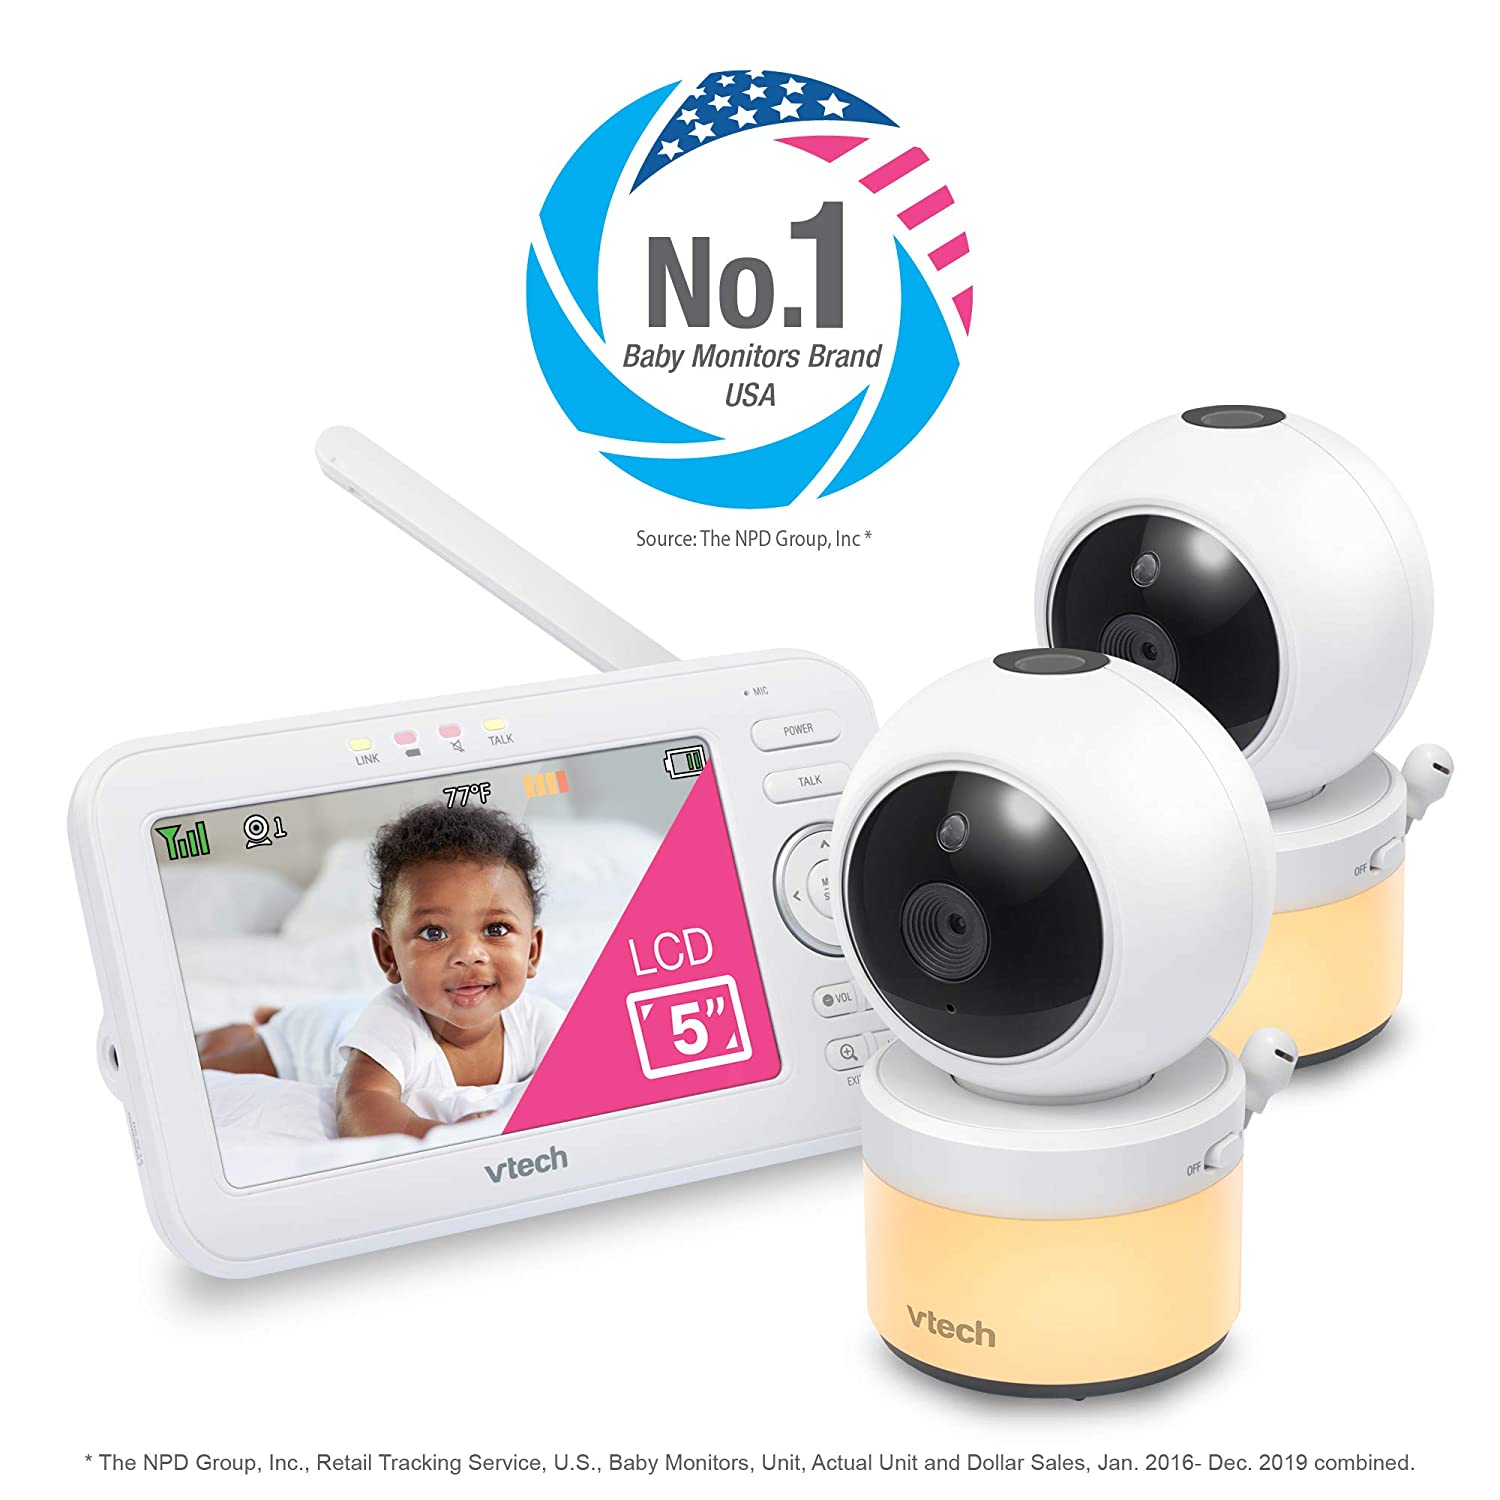 VTech VM5463-2 Video Baby Monitor